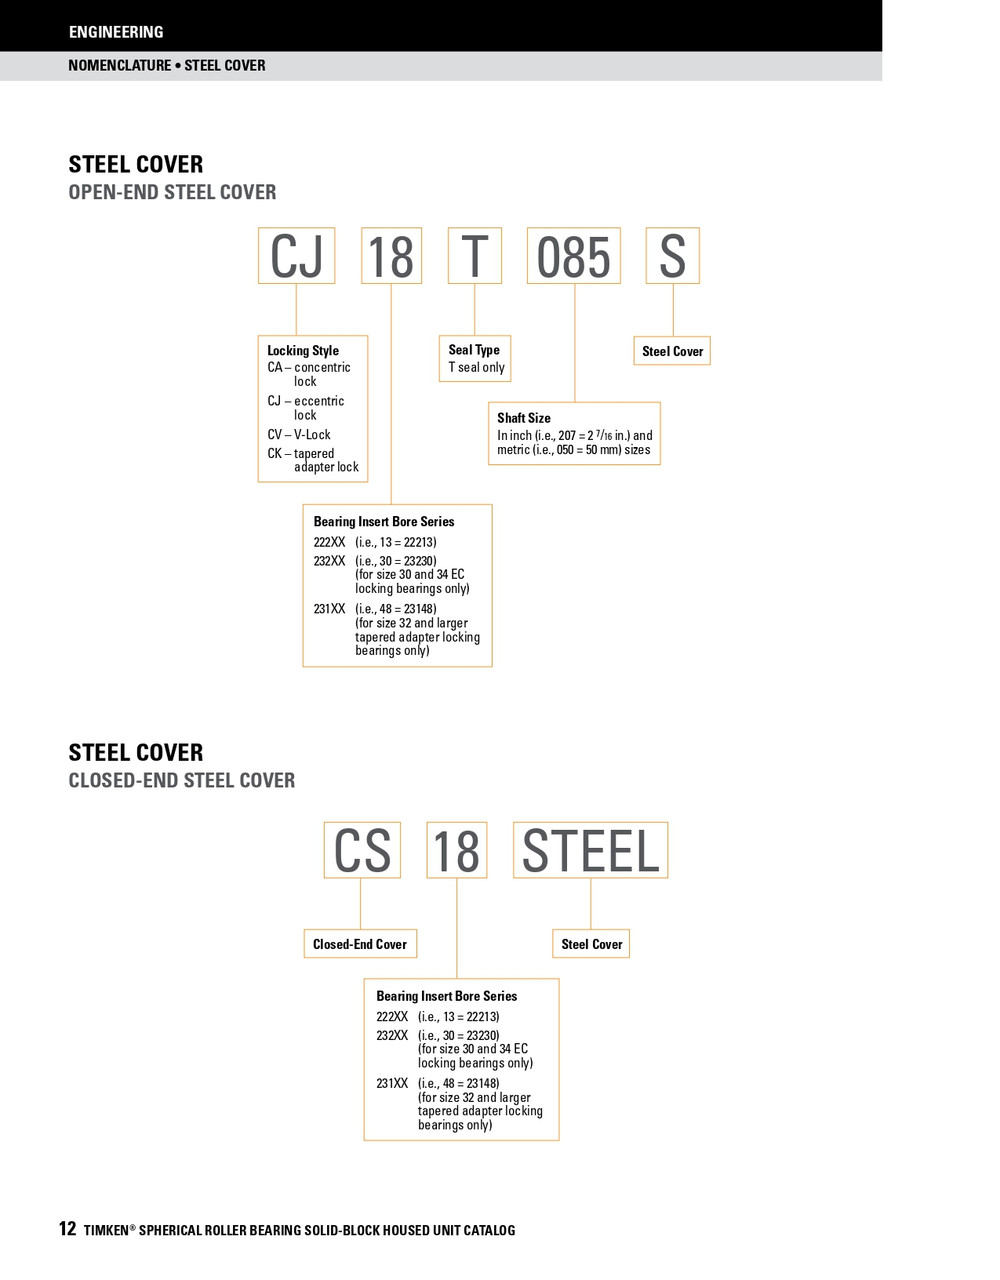 110mm Timken SRB Steel Open End Cover w/Teflon Seal - QV V-Lock® Type   CV24T110S